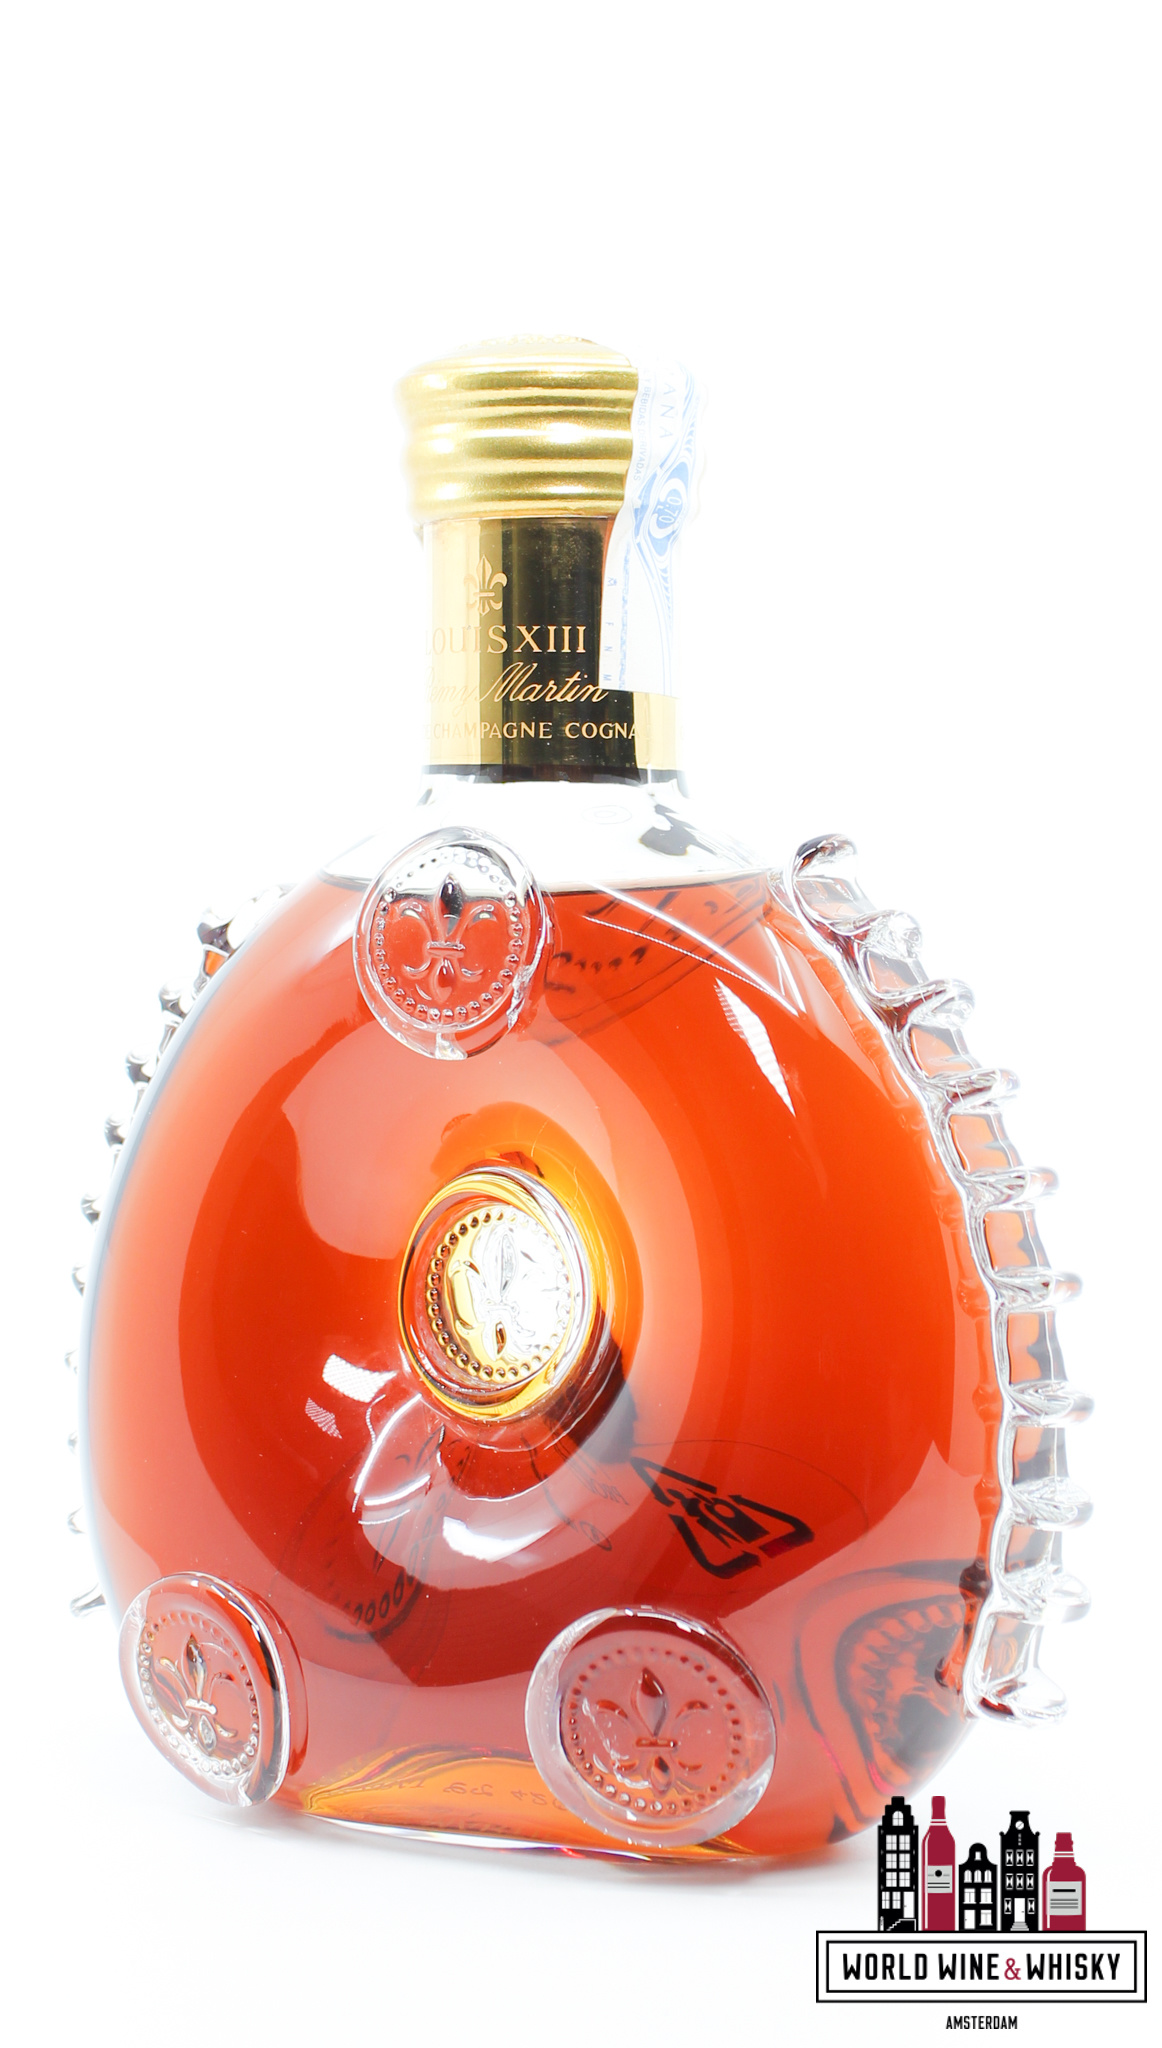 Rémy Martin Remy Martin Louis XIII - Grande Champagne Cognac (90s bottling)